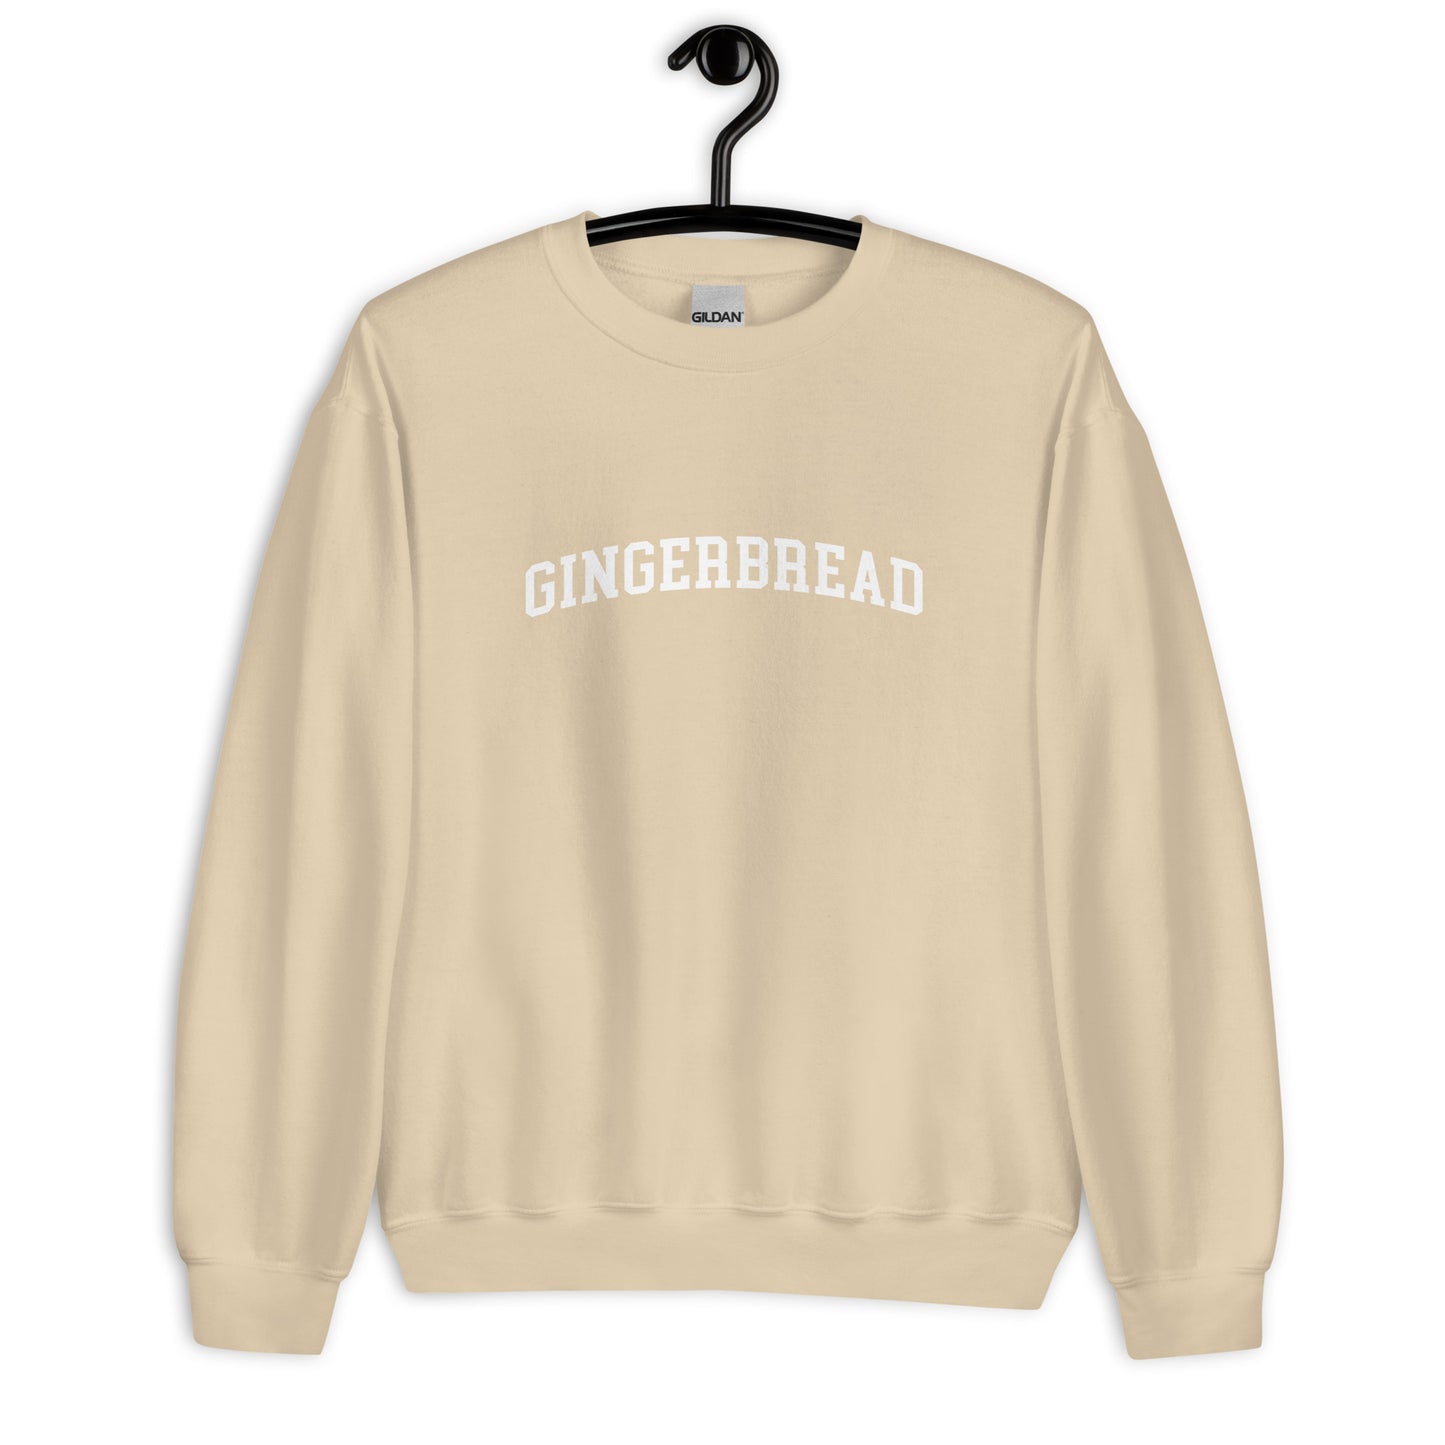 Gingerbread Sweatshirt - Arched Font